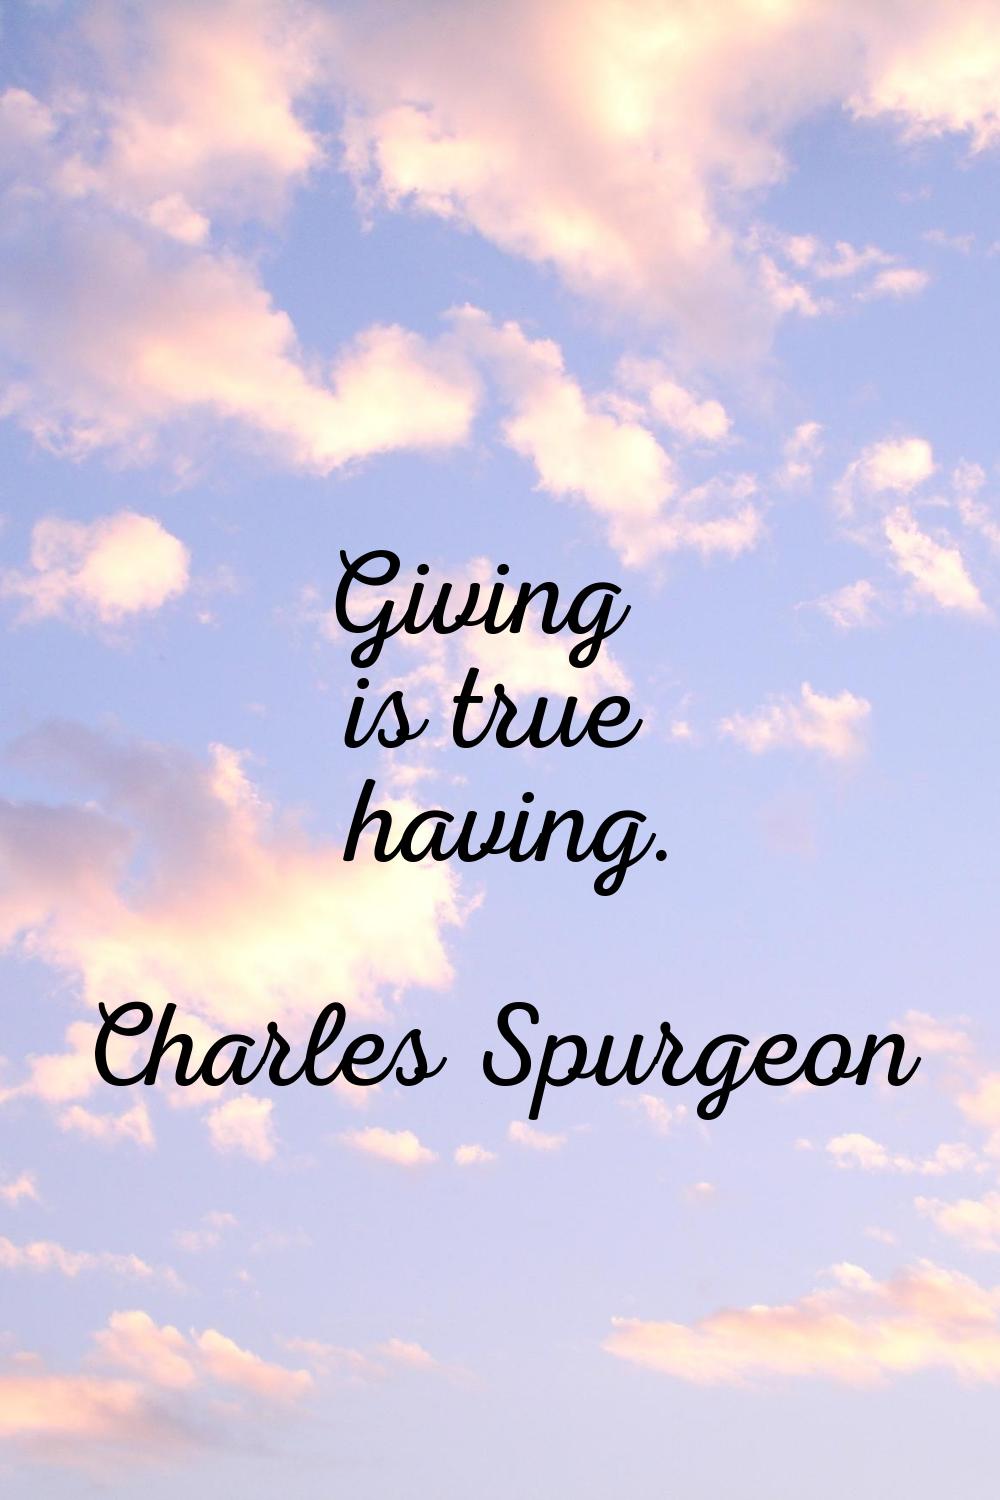 Giving is true having.